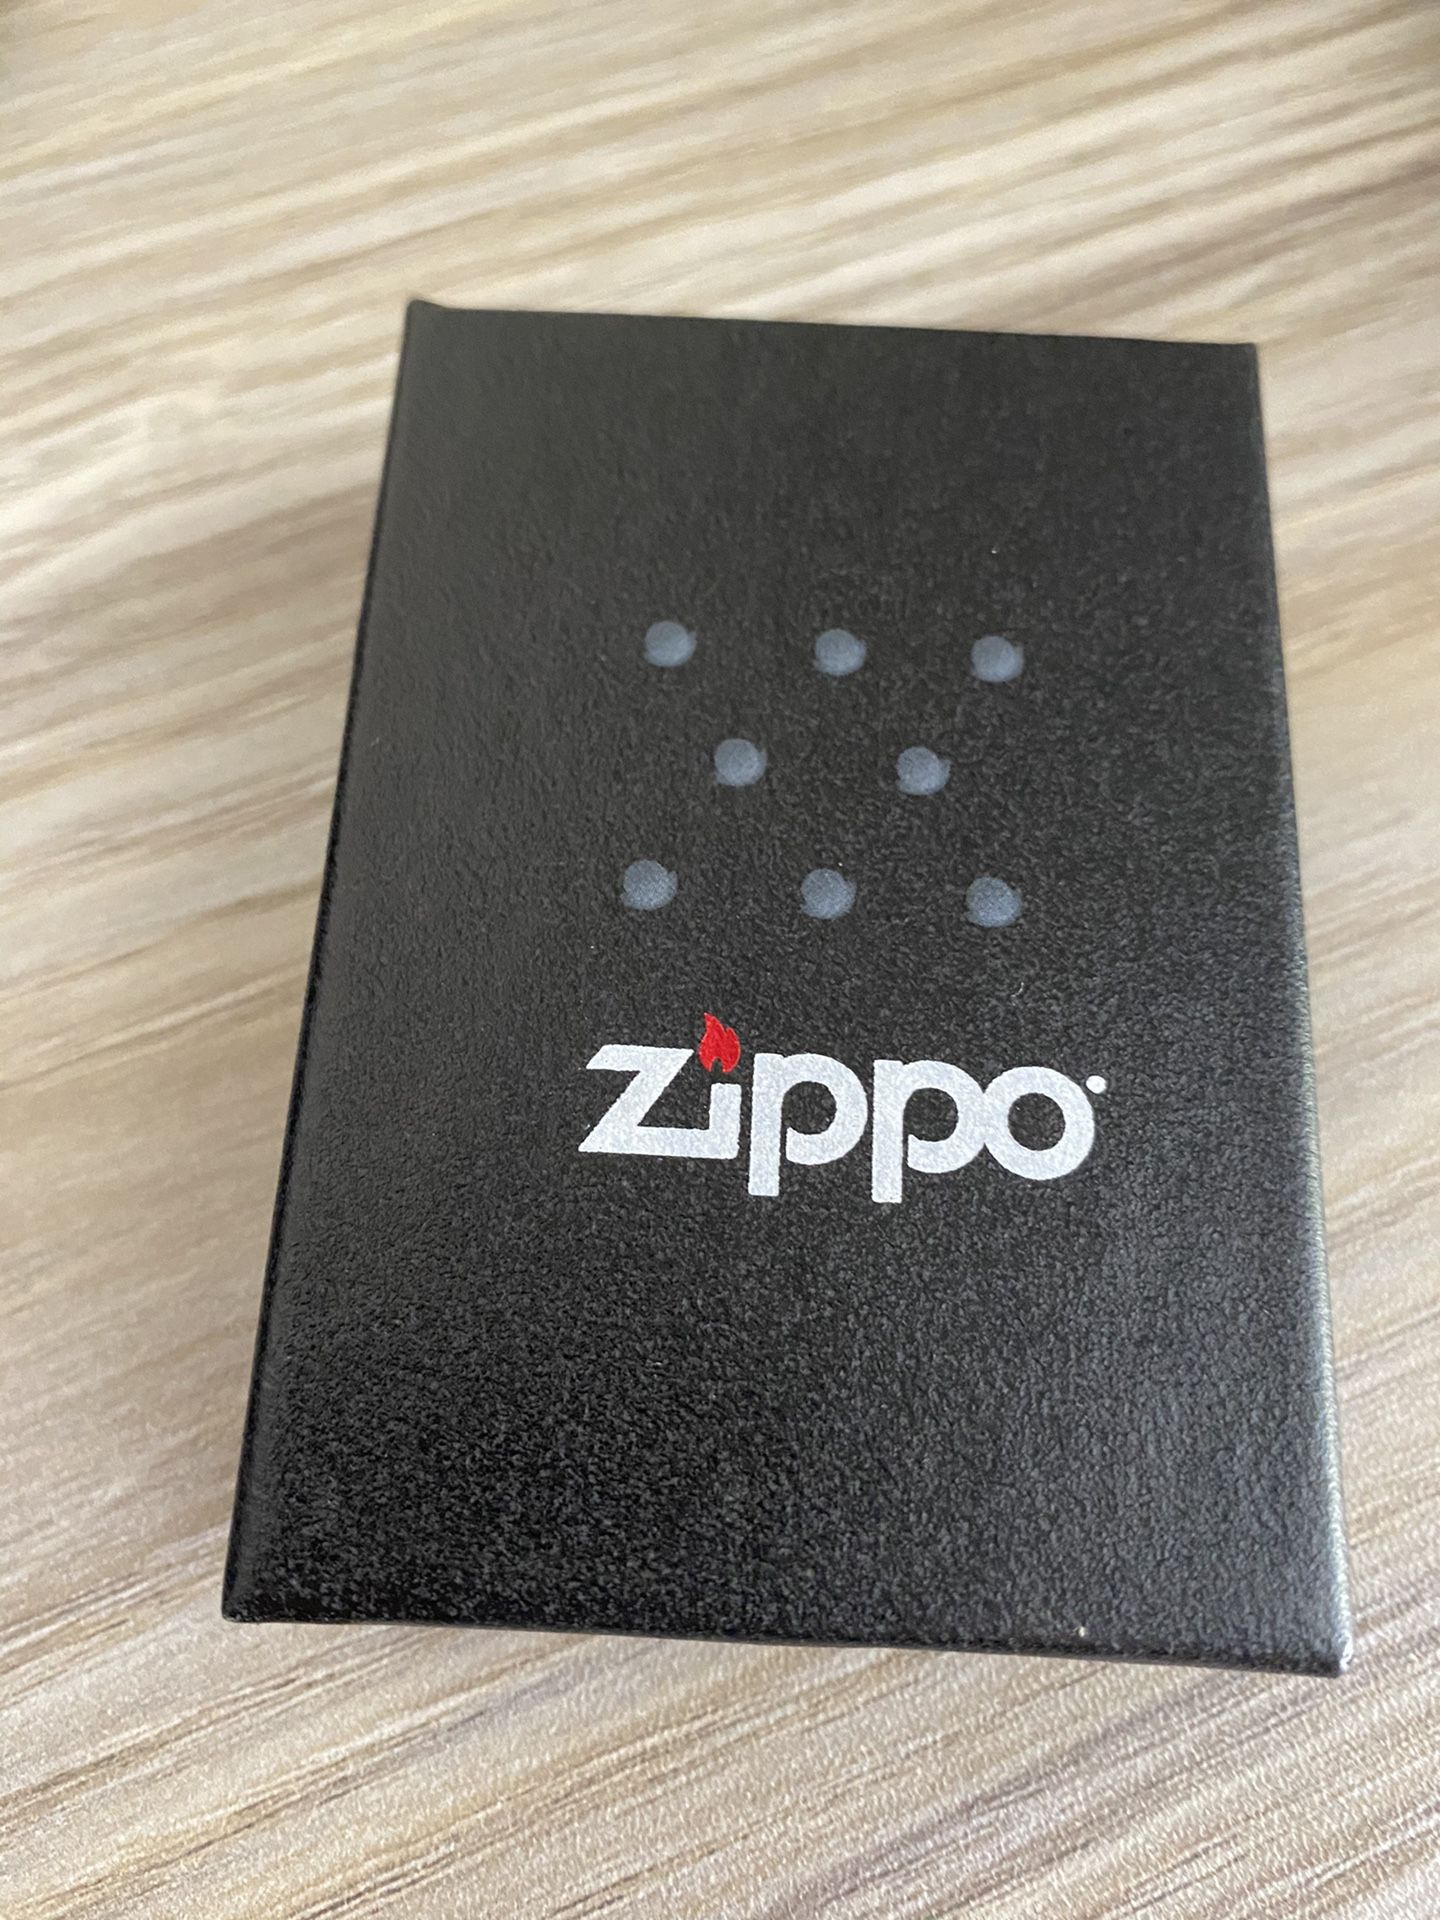 Brand new zippo lighter